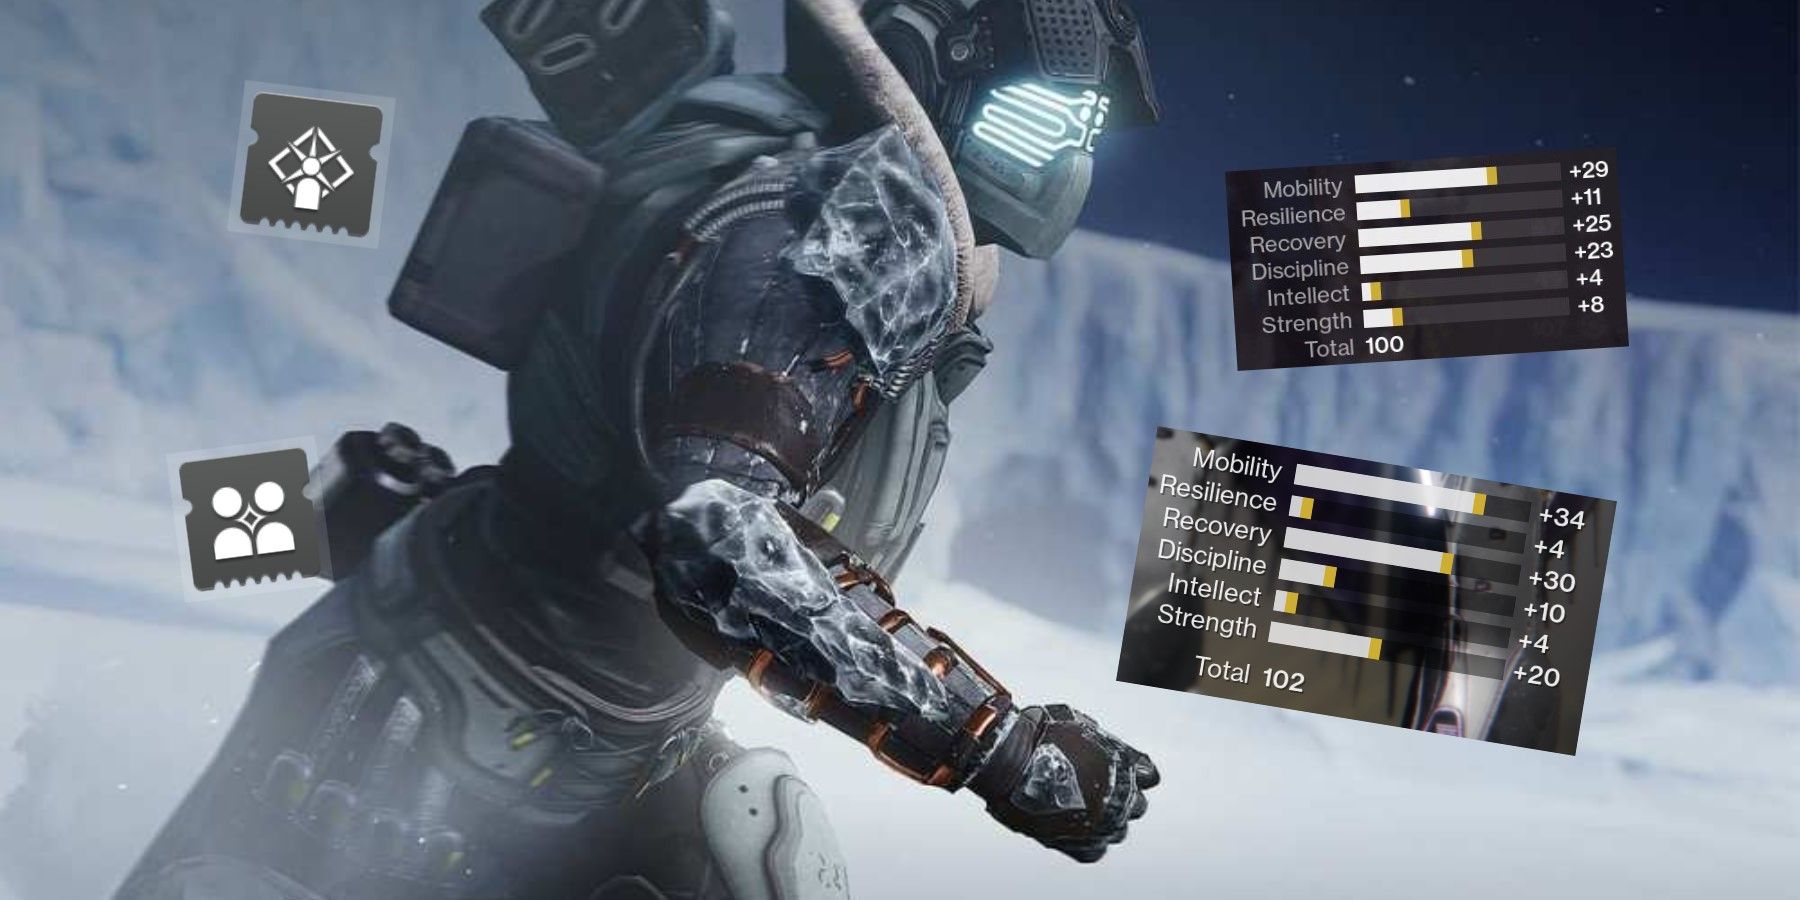 destiny 2 player shows quad-100 stats setup titan behemoth stasis powerful firends radiant light beyond light 6000 hours farming